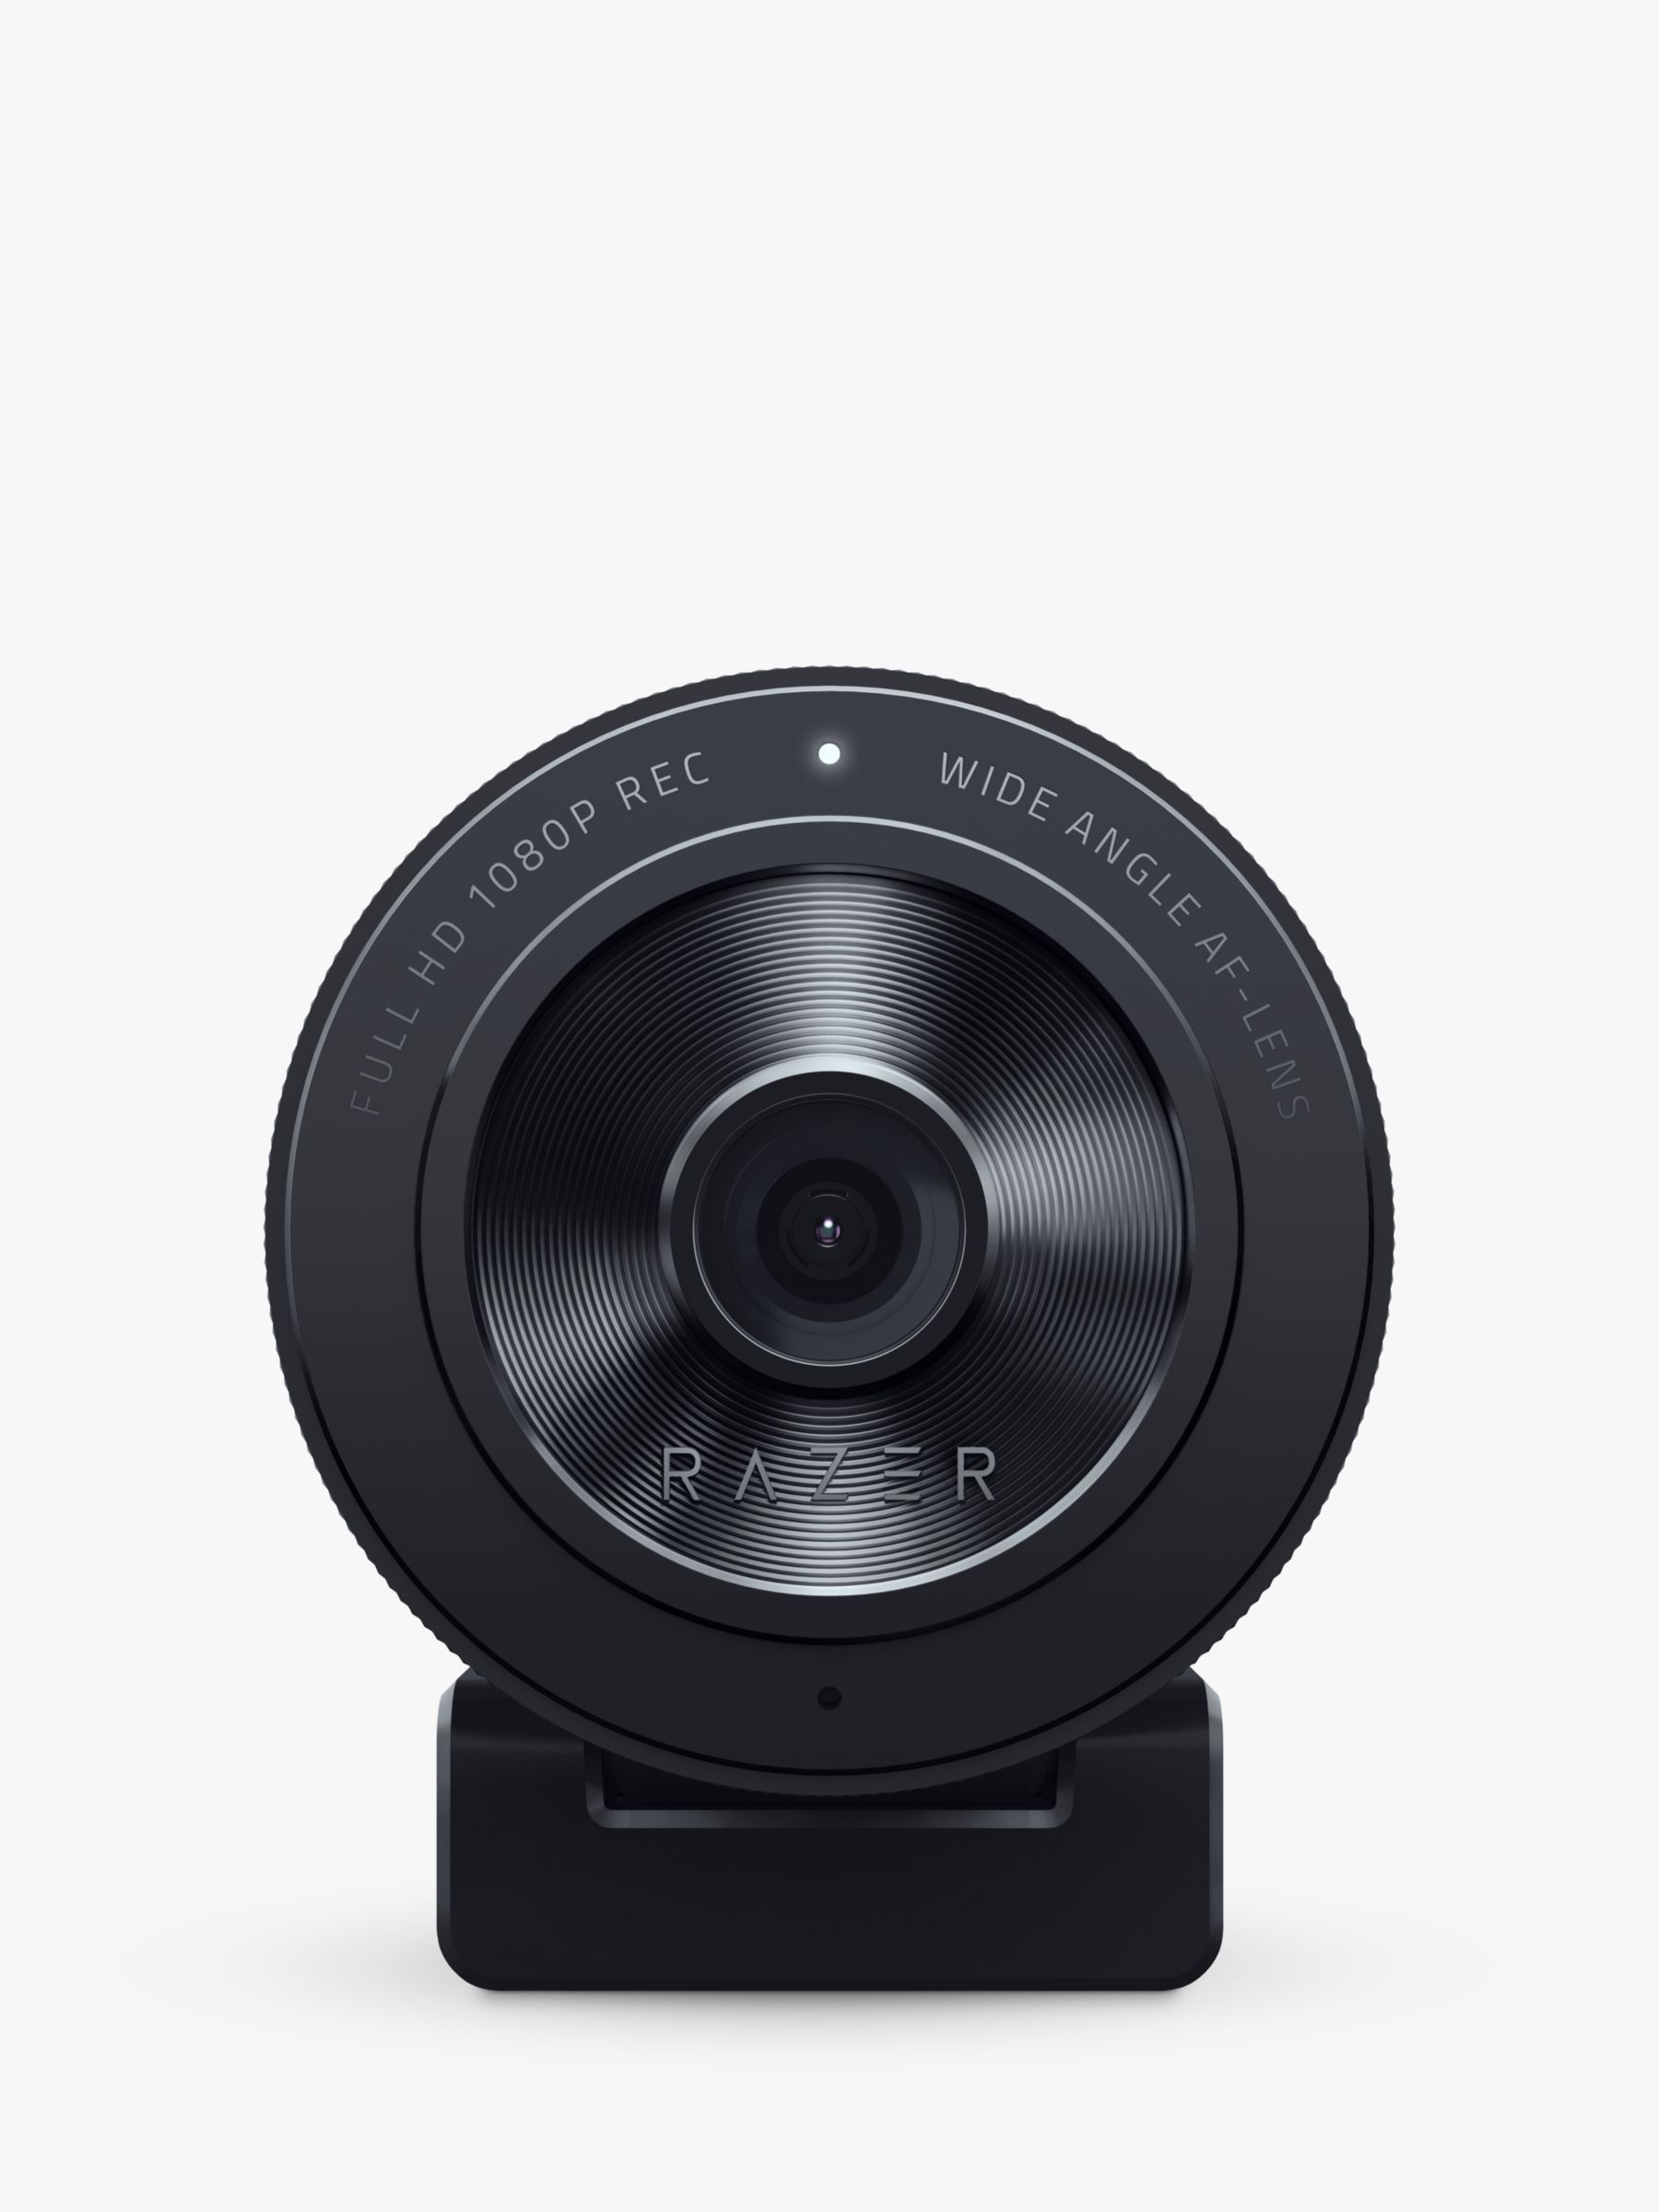 Razer Kiyo Pro review: A competent but expensive webcam